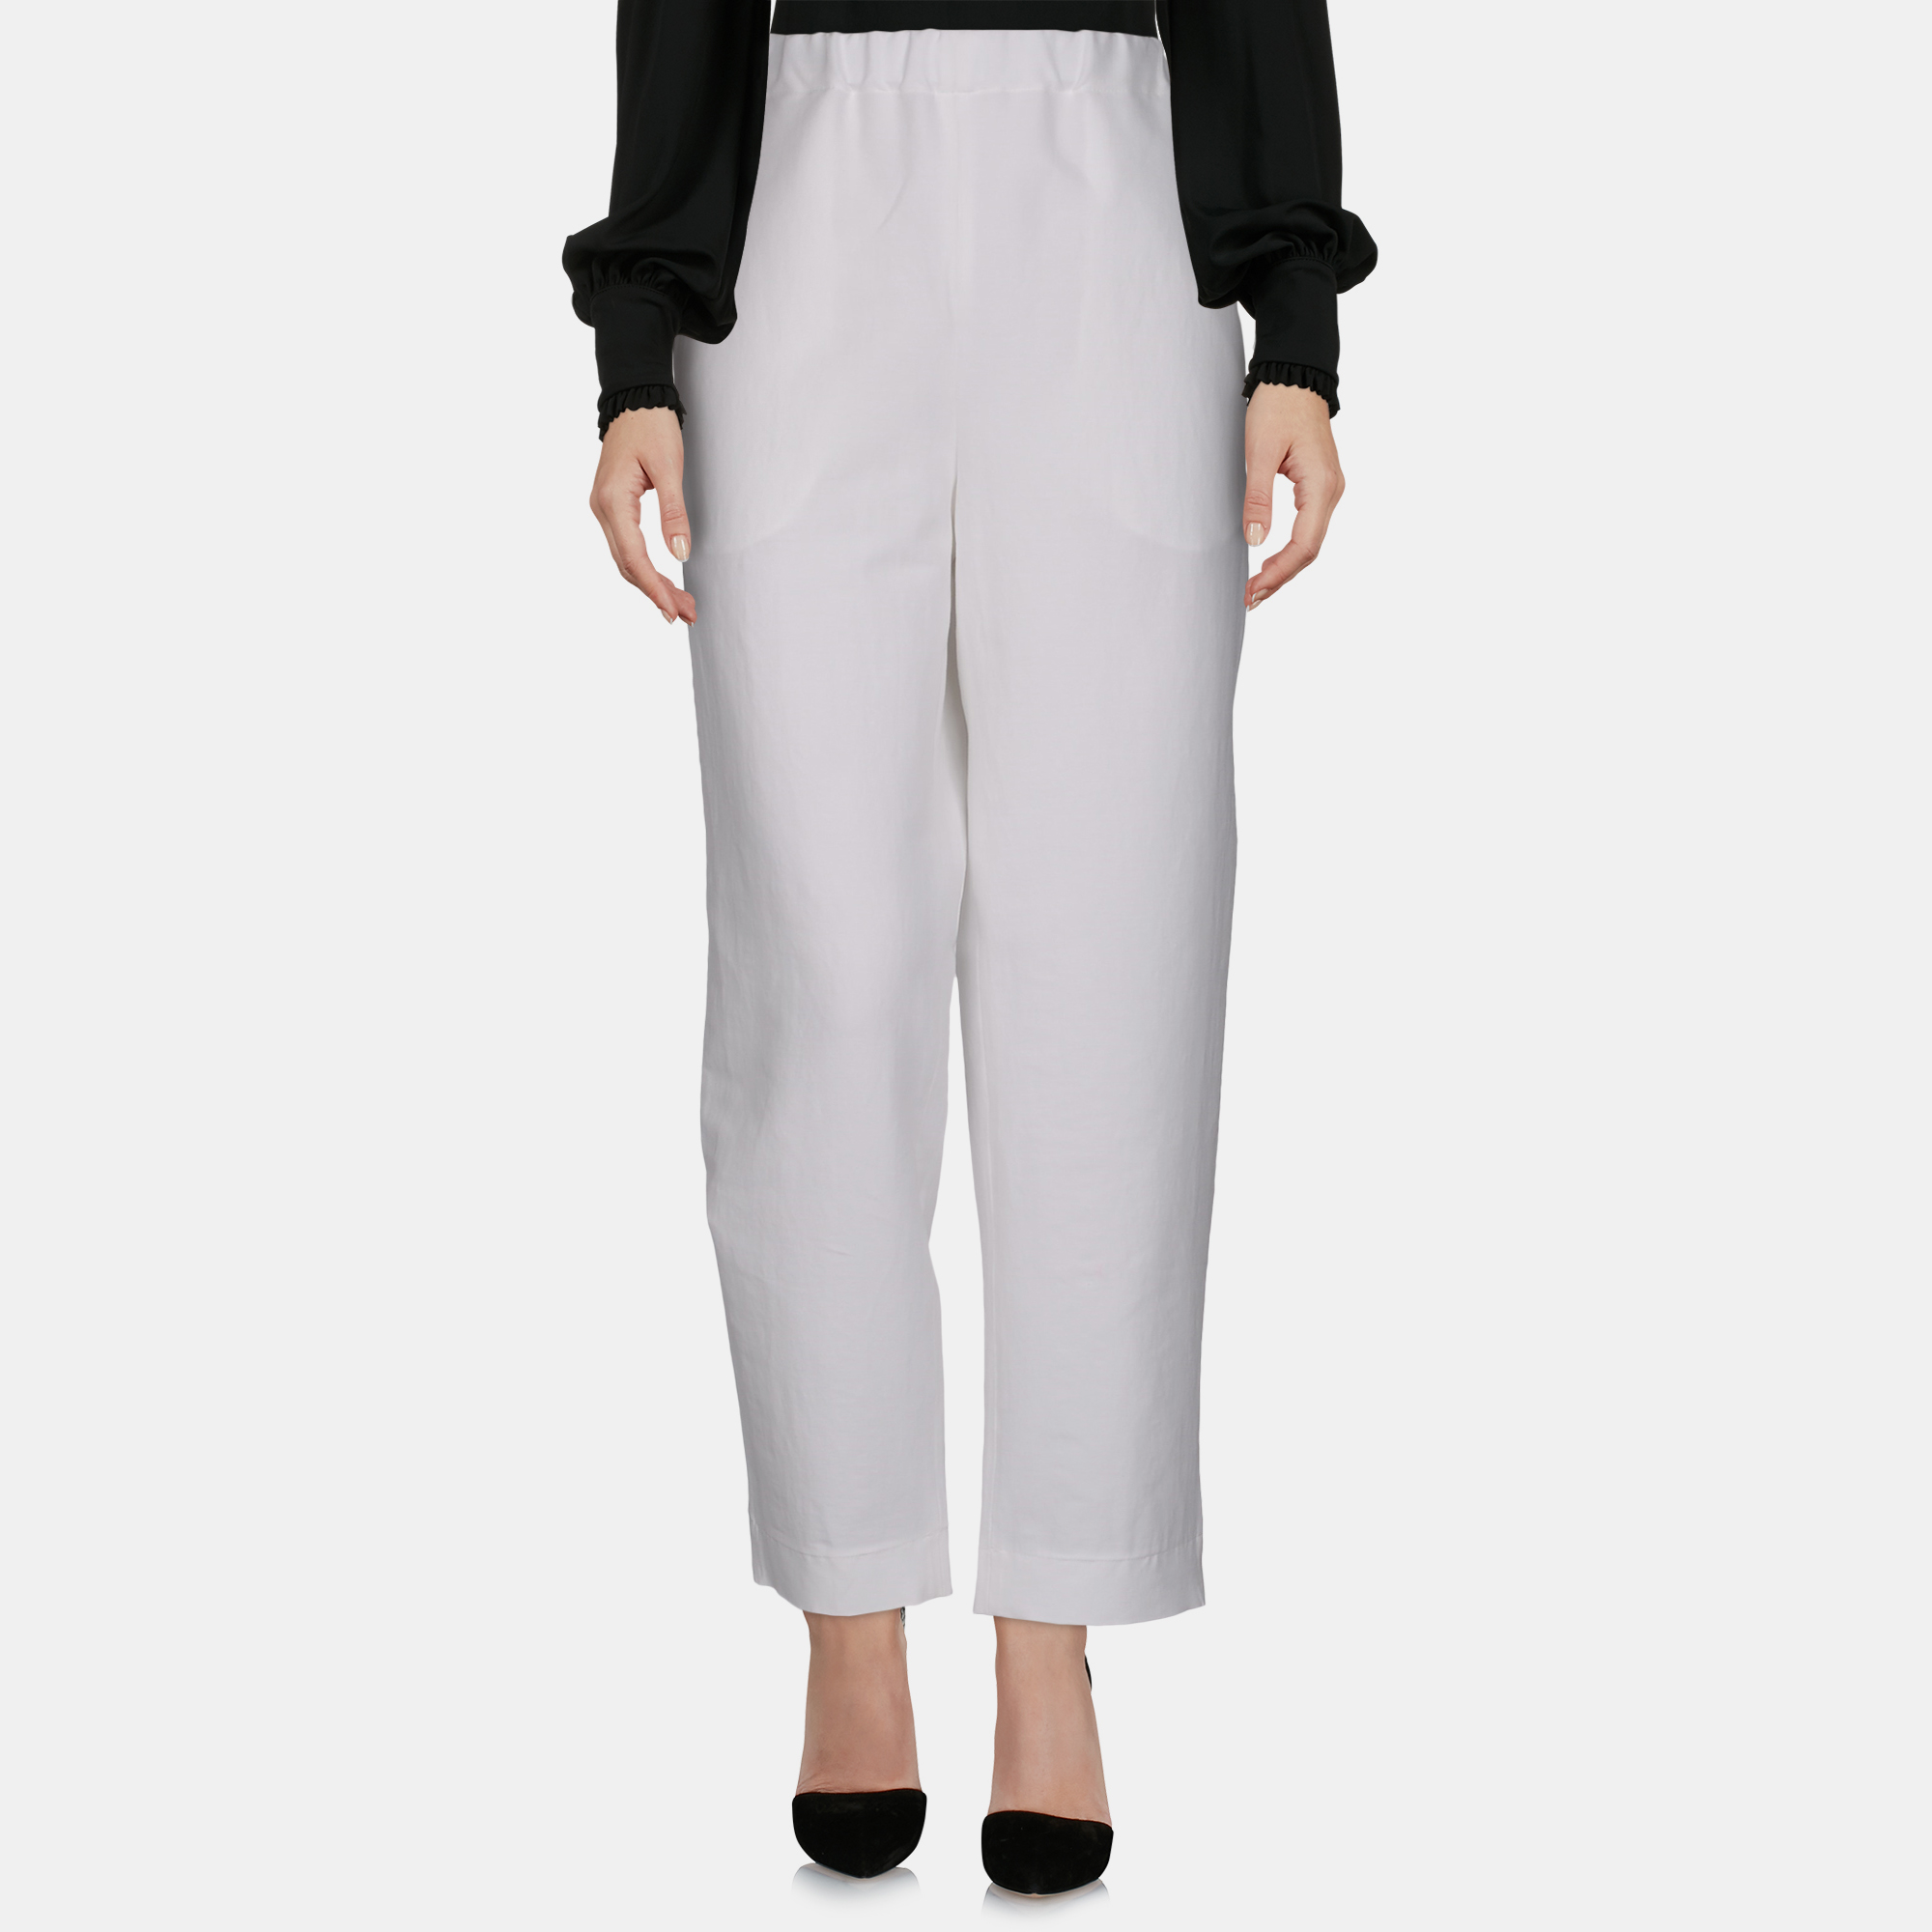 Marni white linen-blend elastic waist trousers m (it 42)